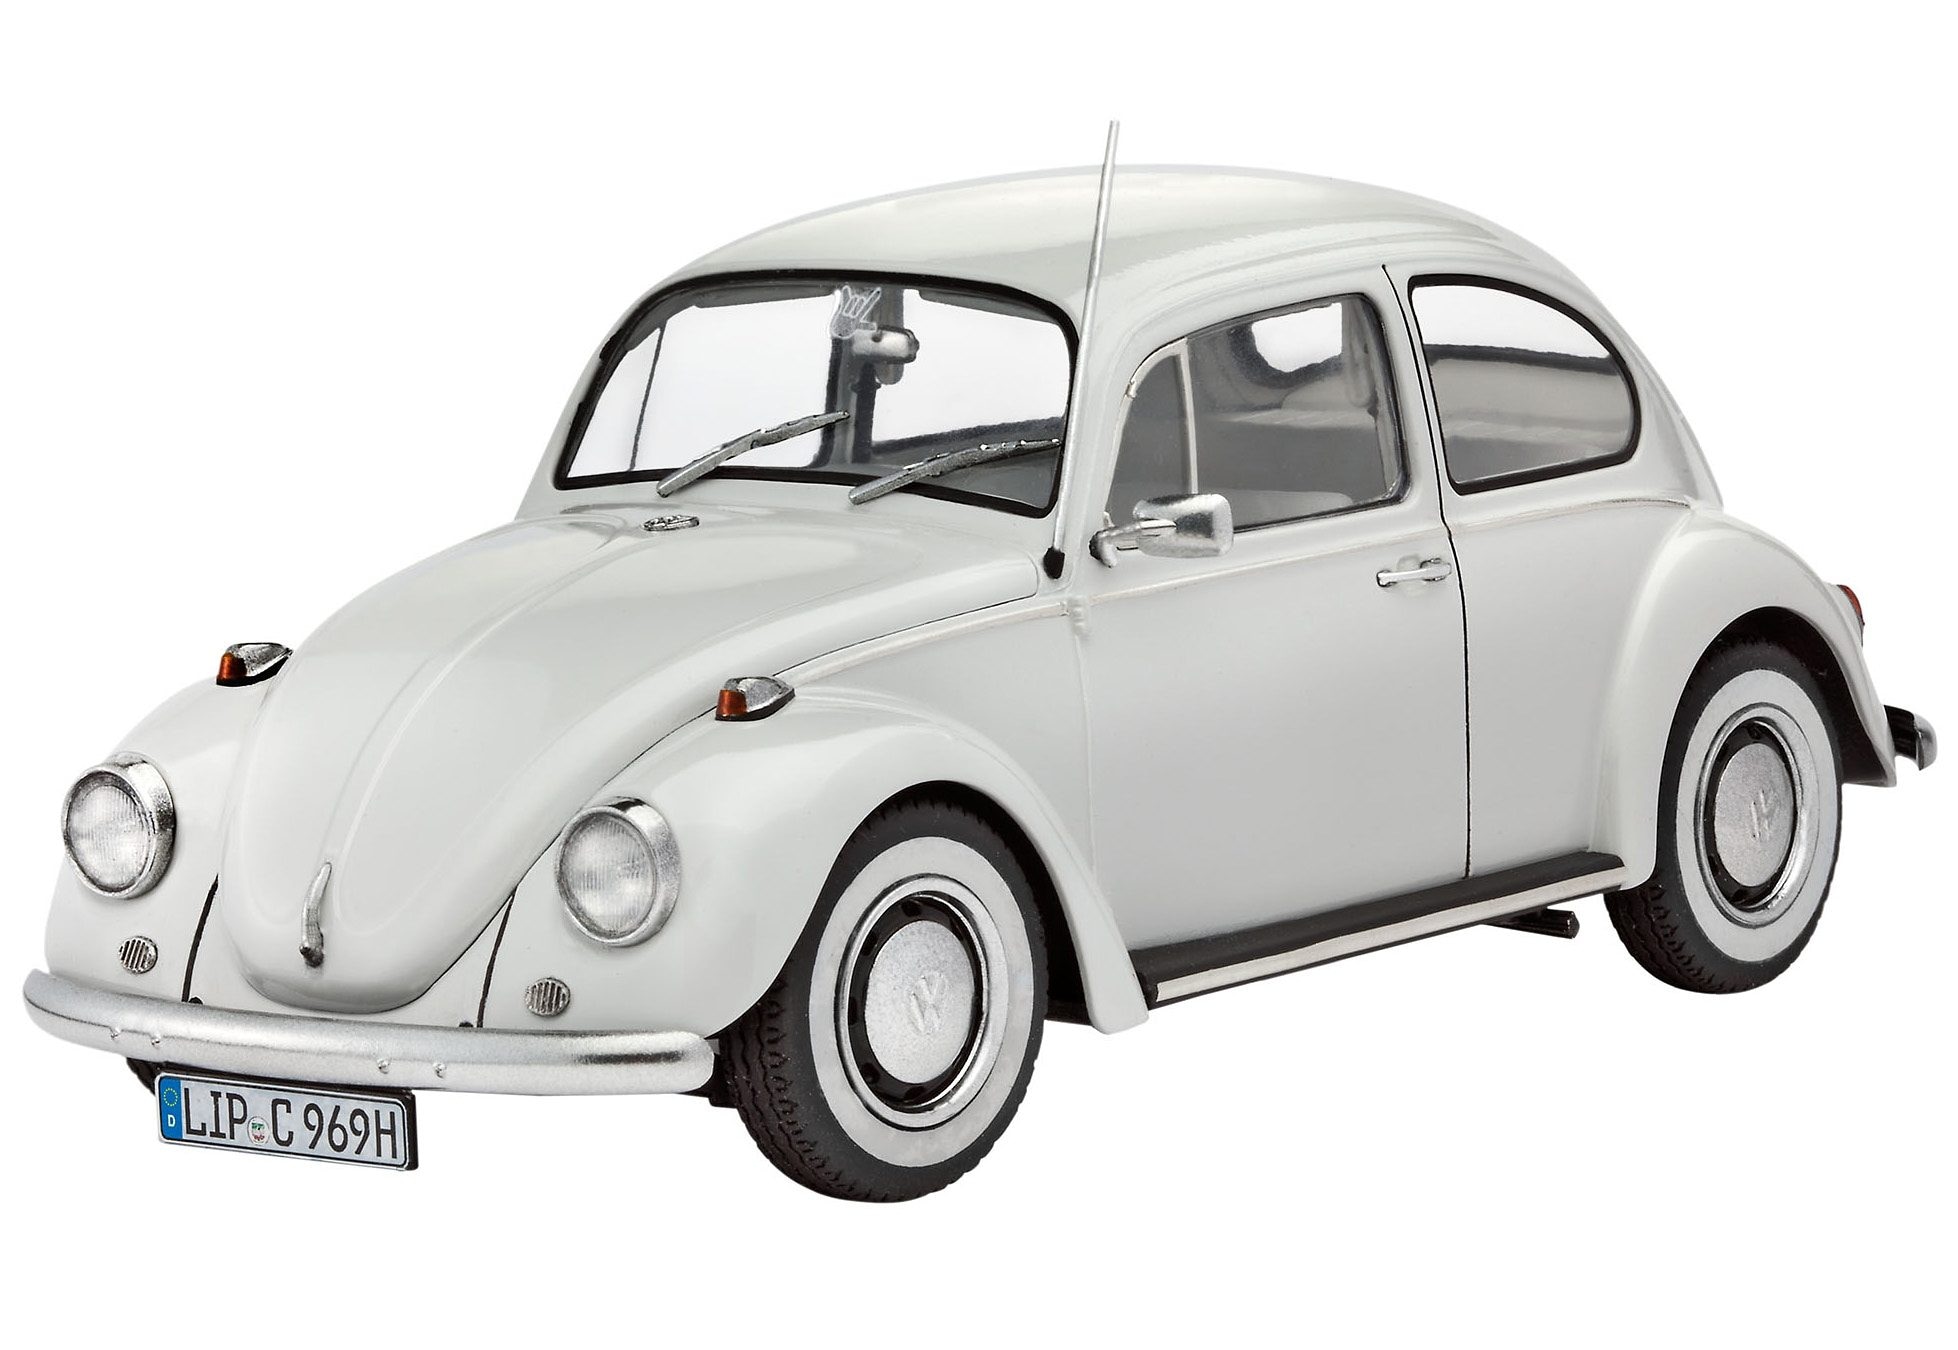 Revell® Modellbausatz »VW Beetle Limousine 68«, (Set), 1:24, Made in Europe